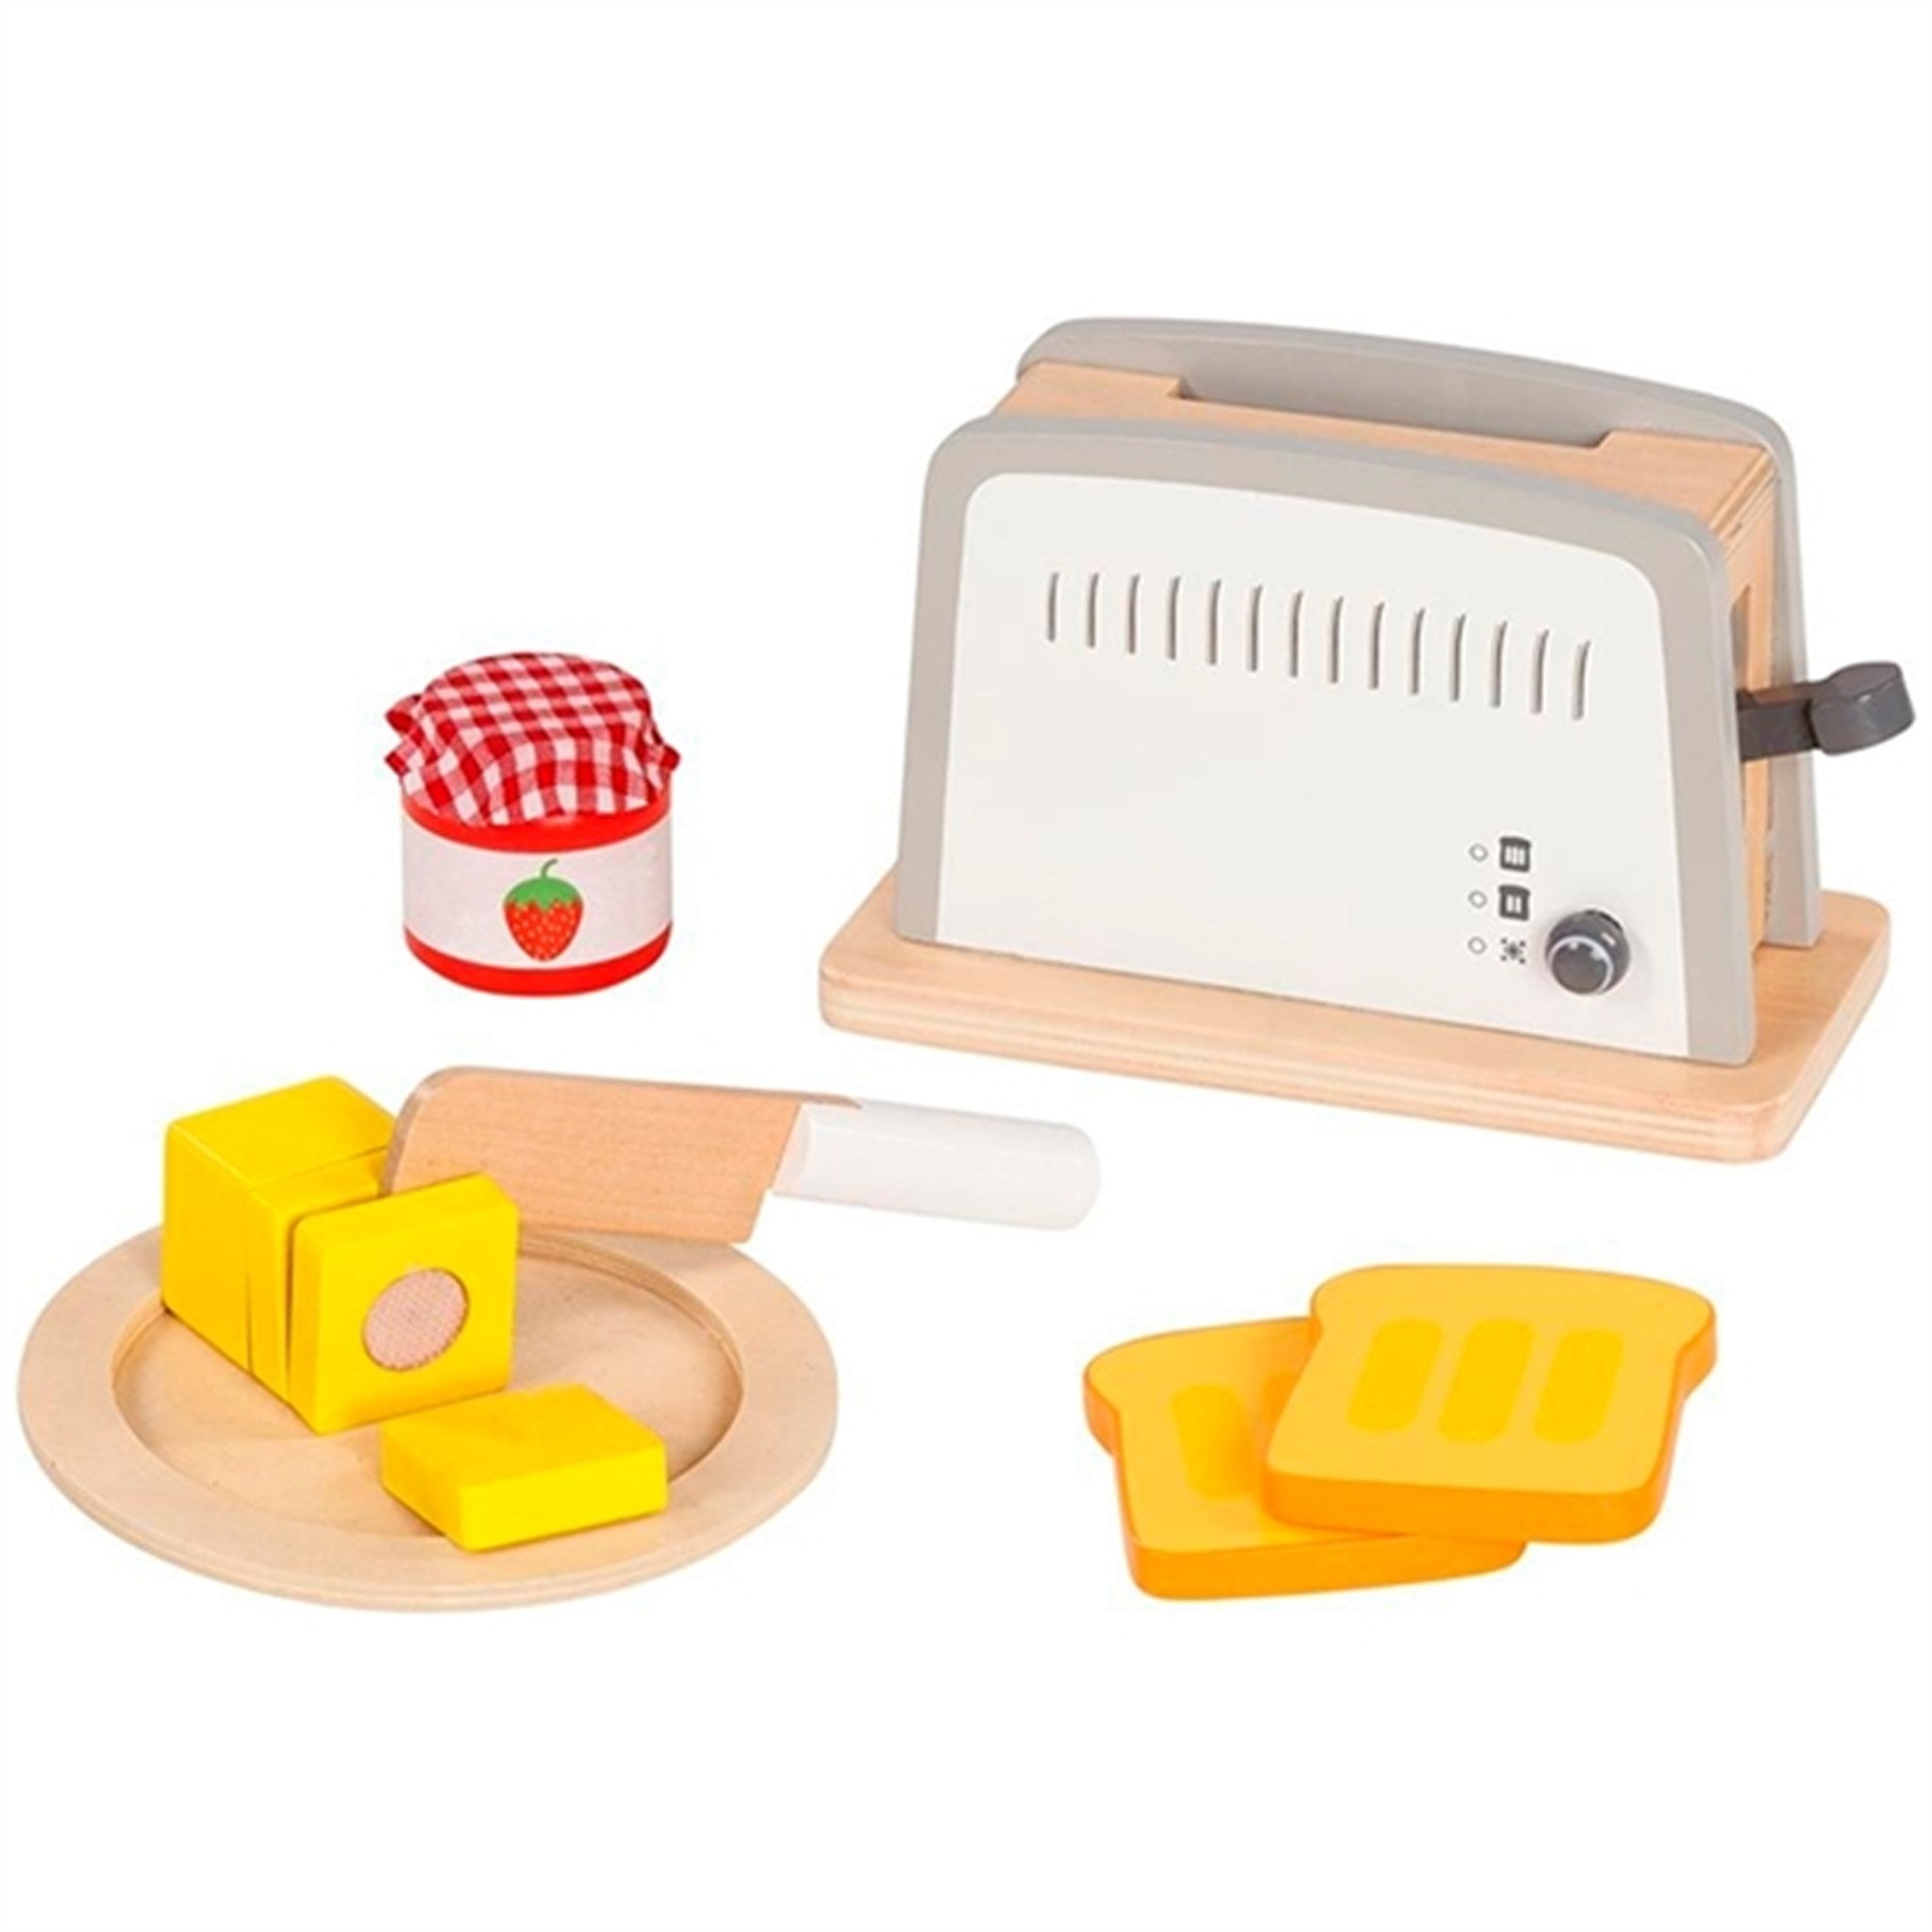 Goki Toaster